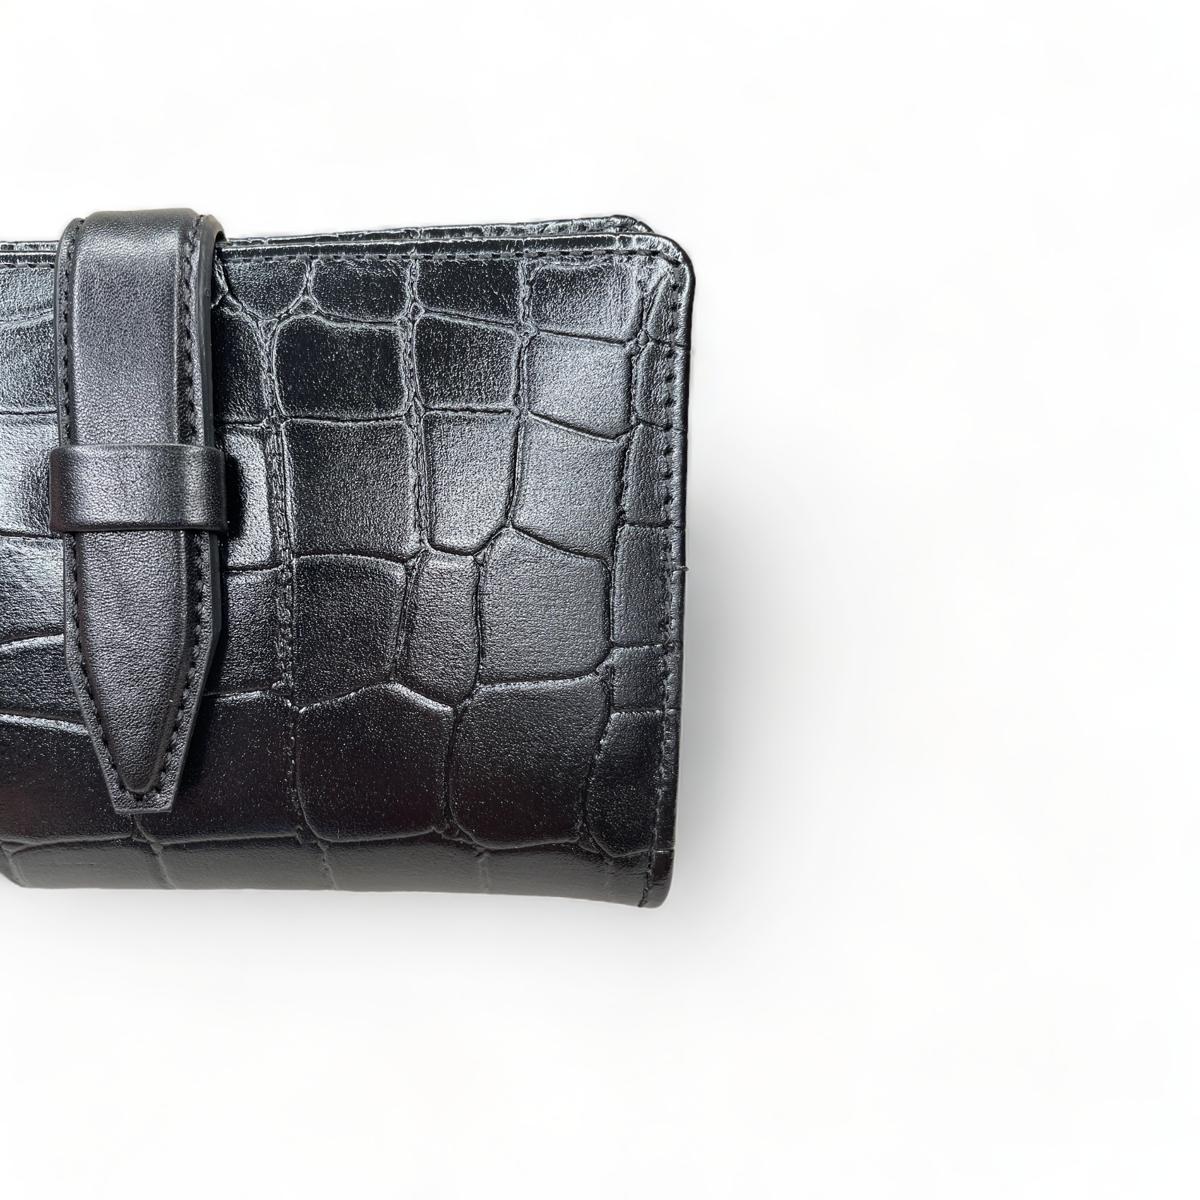 LeatherLuxe - Black Wallet Genuine Leather Wallet; Card Holder Genuine leather Designer Premium leather bag for women leather hobo tote messenger bag Leather Accessories Leather Shop Leather Goods